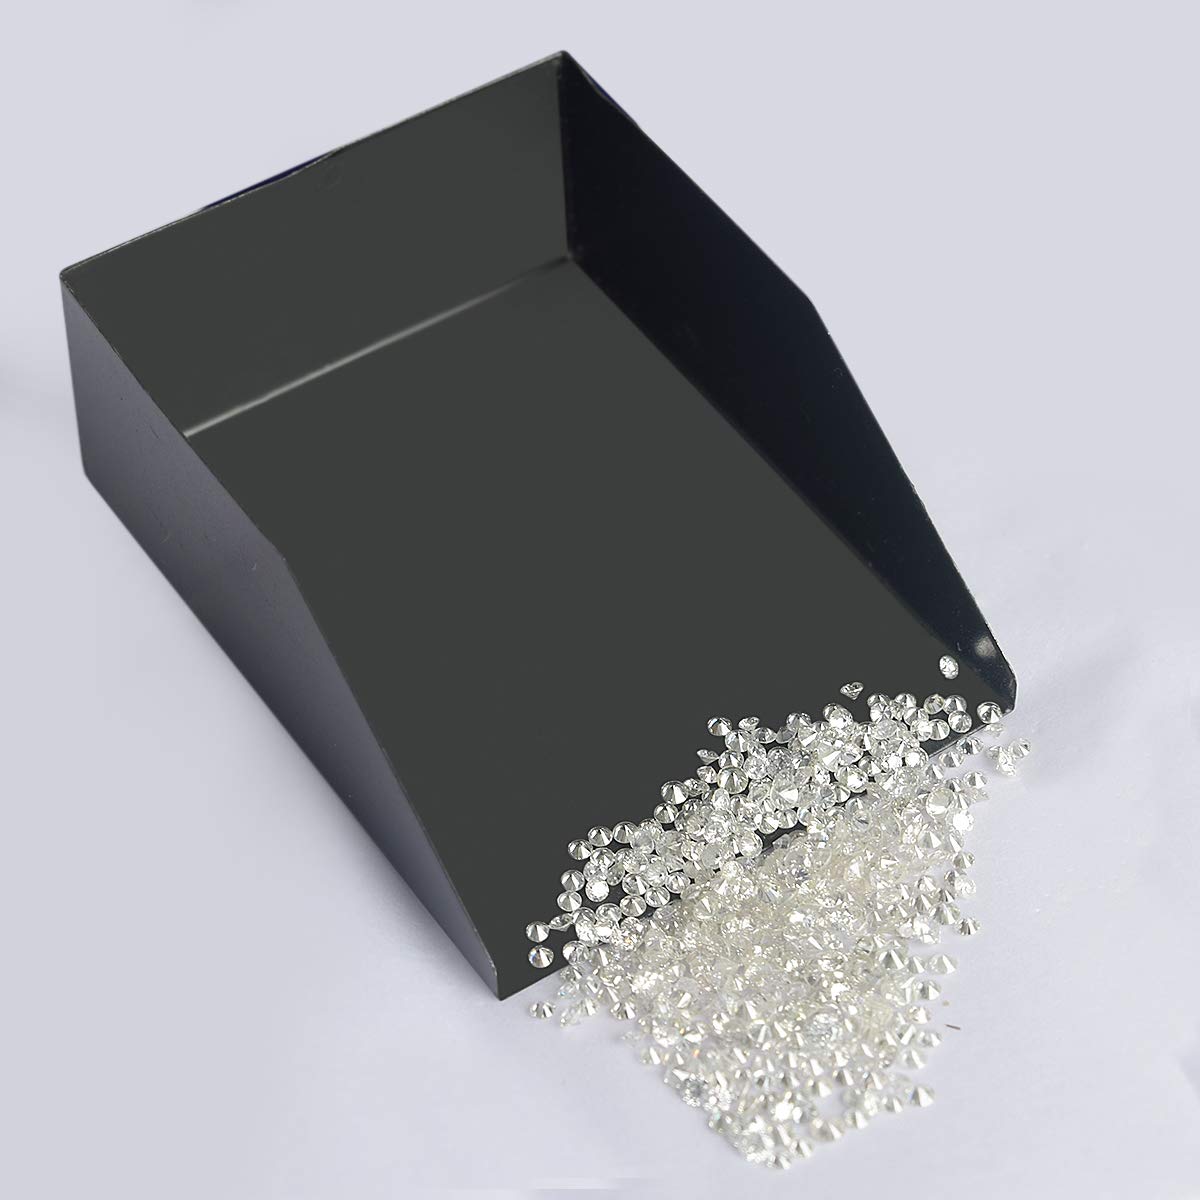 GEMHUB VVS Clarity DEF Color 1.25 MM LAB Created CVD Diamonds Round Brilliant Cut 1 Carat LOT